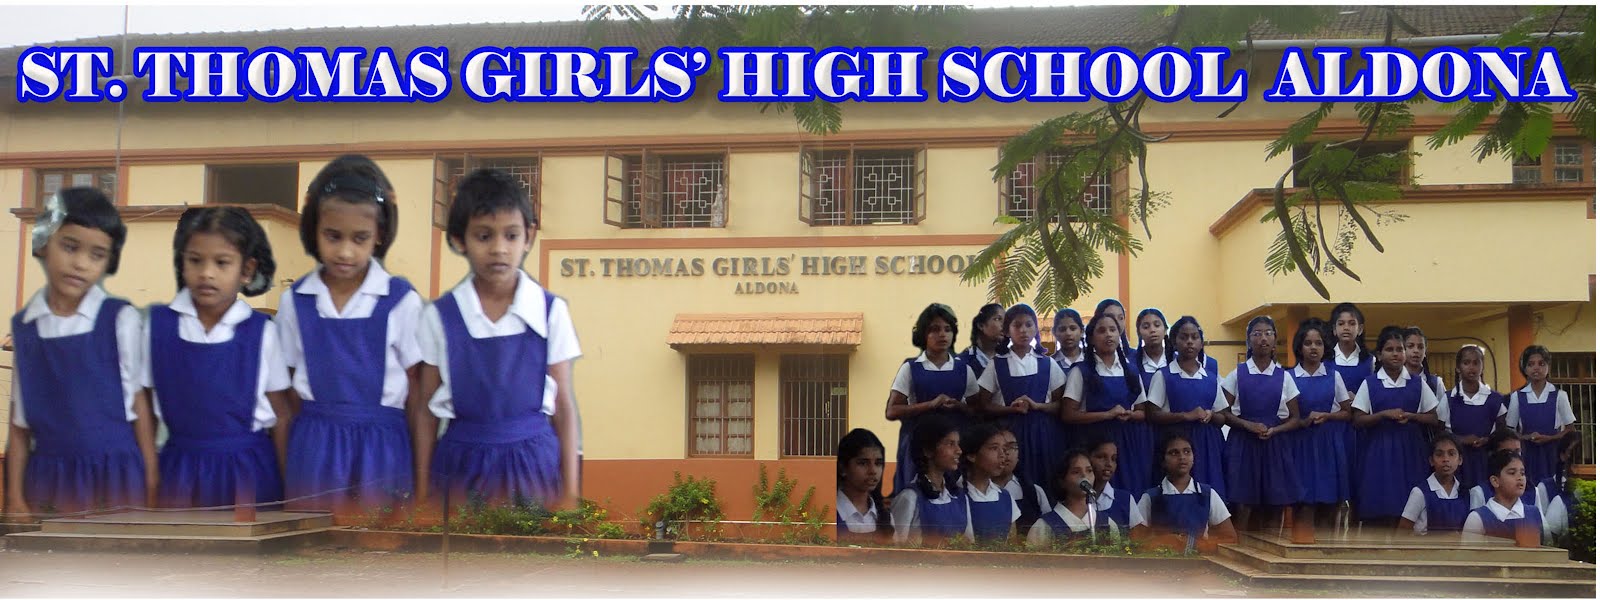 ST THOMAS GIRLS' HIGH SCHOOL_ALDONA